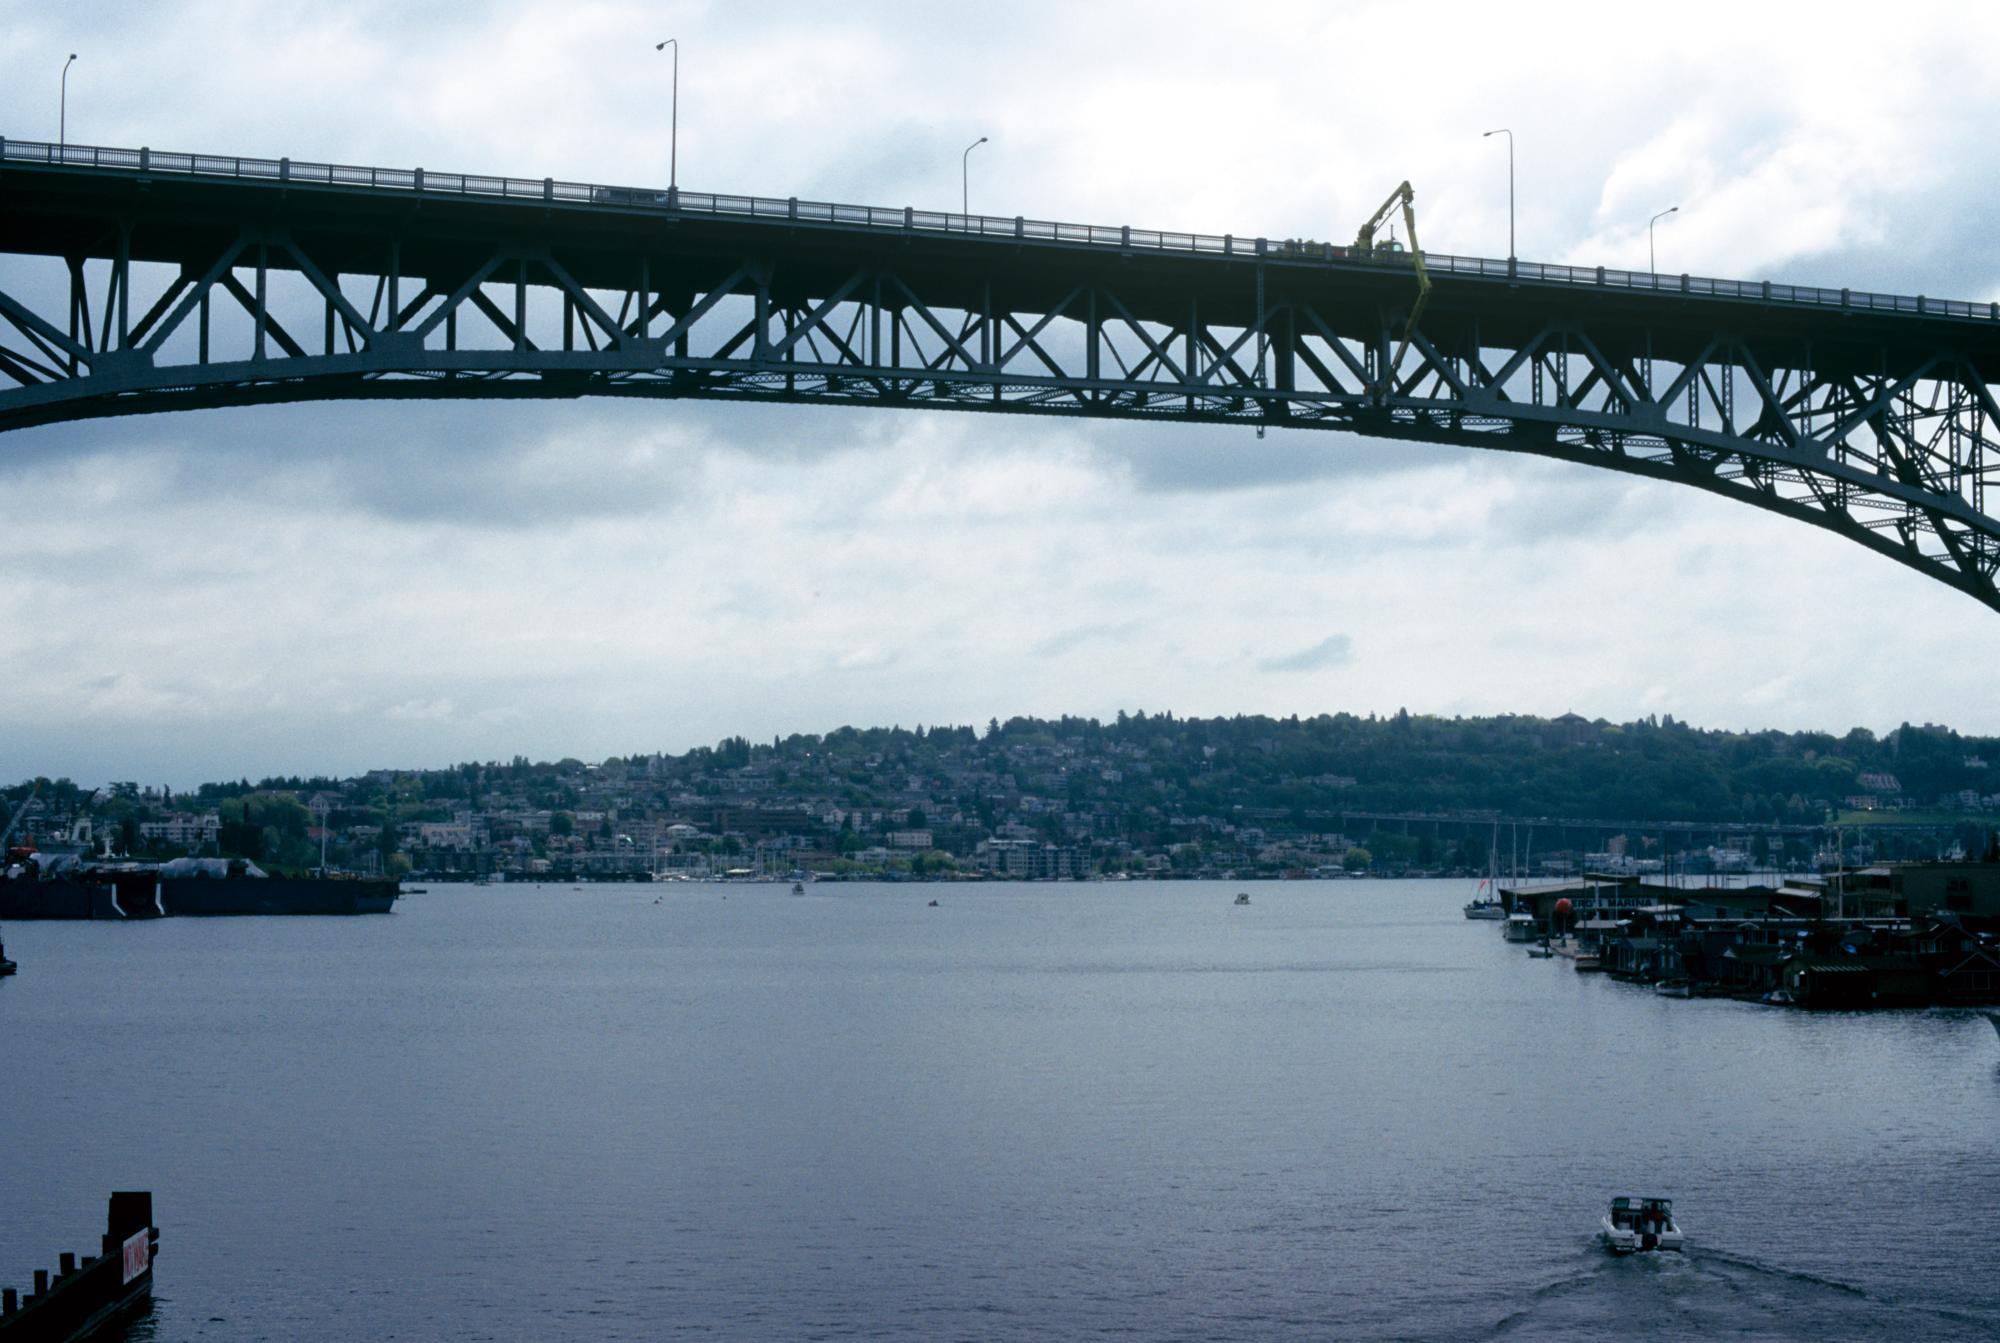 Seattle (1995) - Aurora Bridge